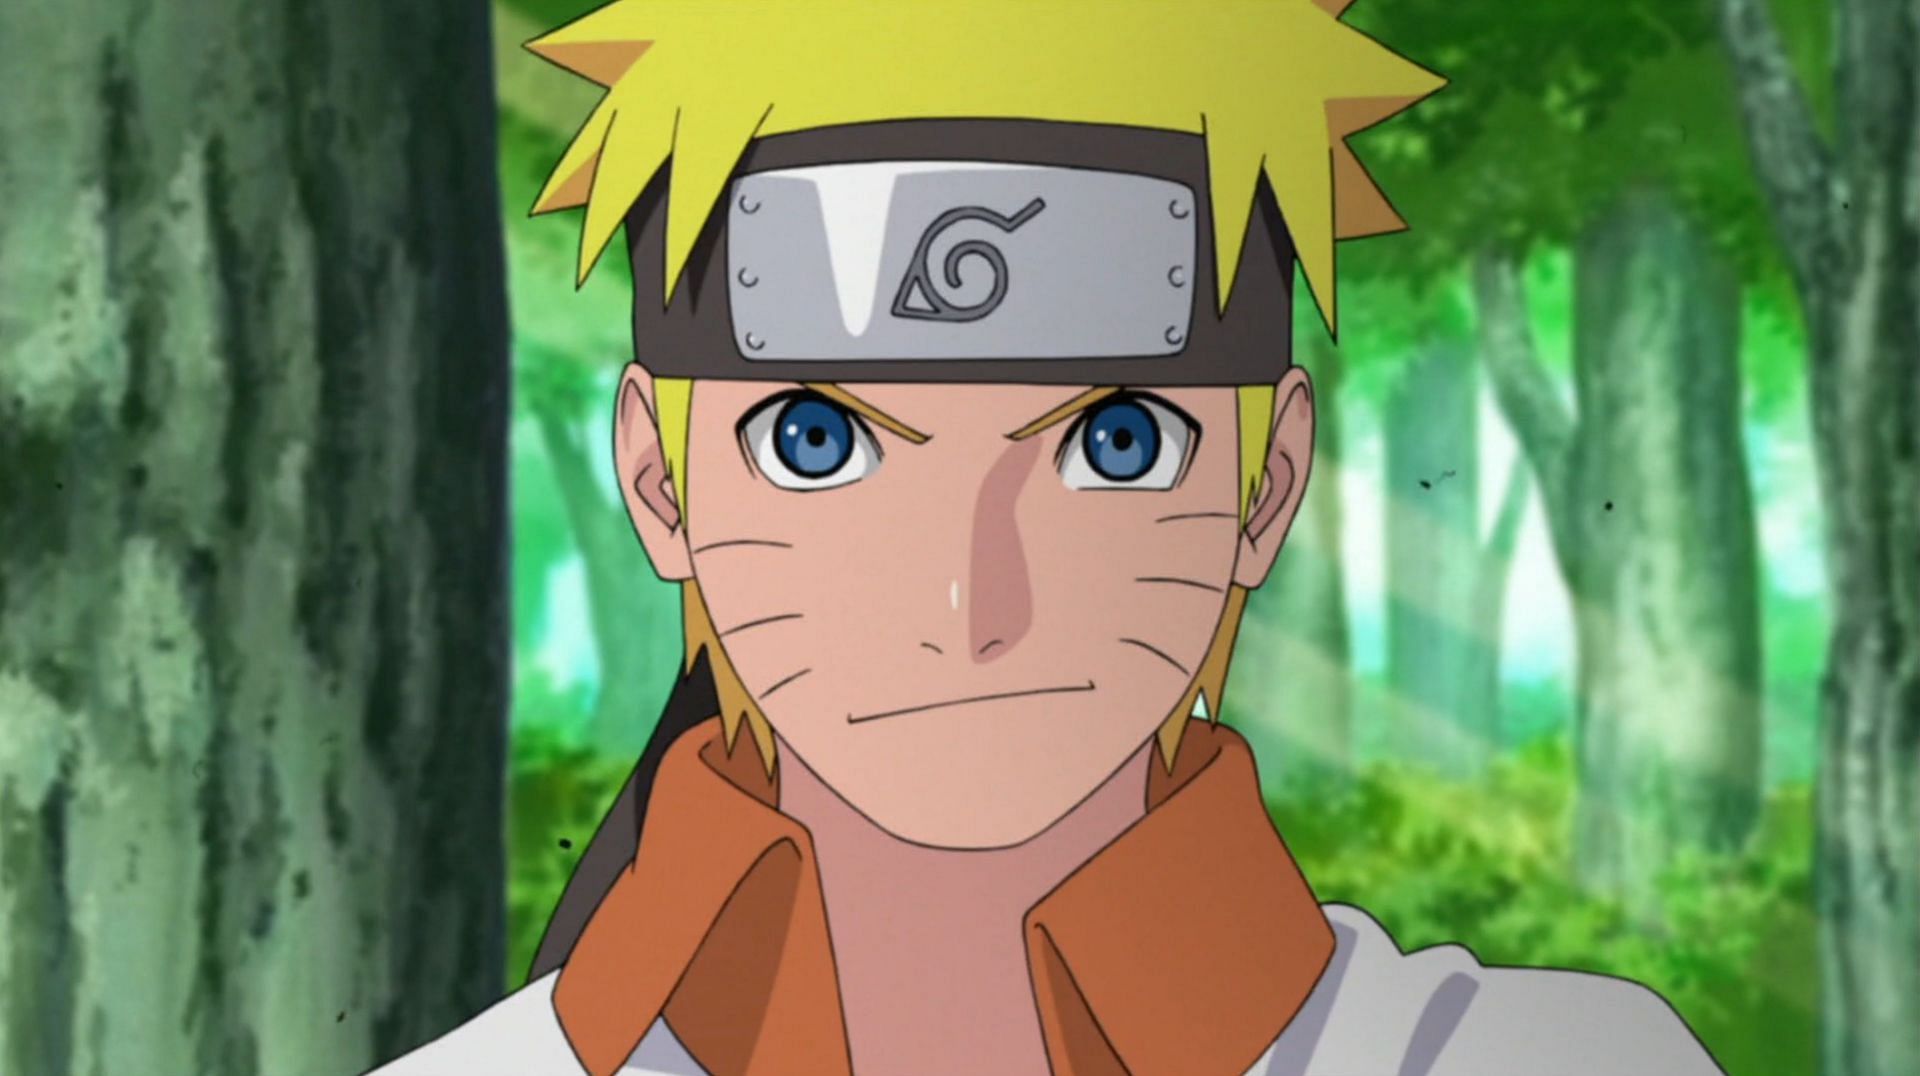 Naruto Uzumaki as he appears at the end of Naruto Shippuden (Image via Studio Pierrot)